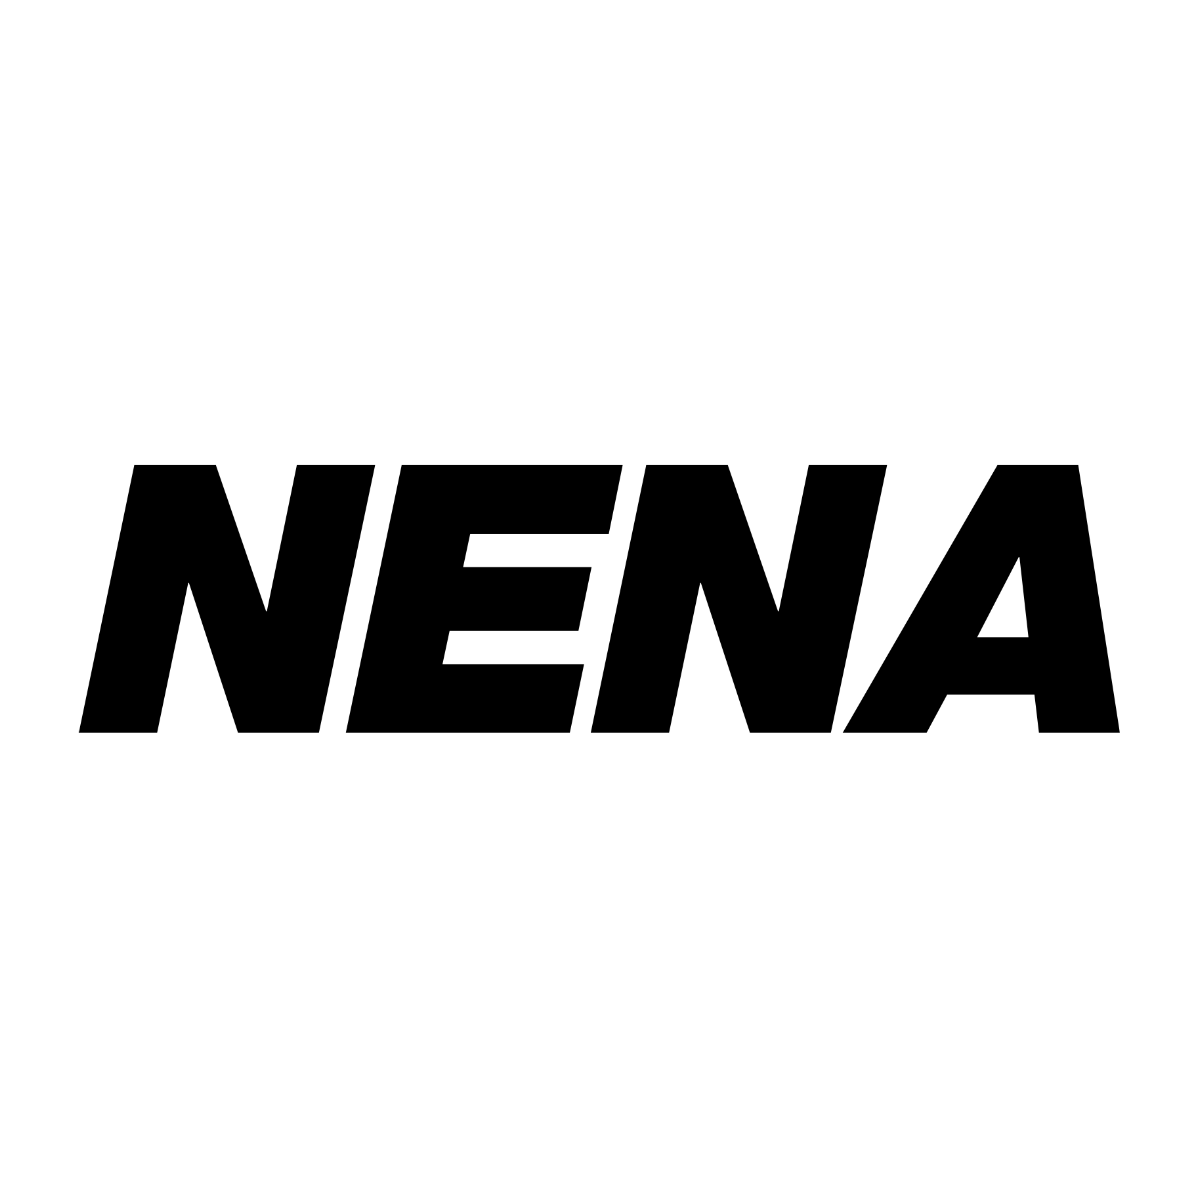 NENA Rear Window Sticker (Interior Adhesive)